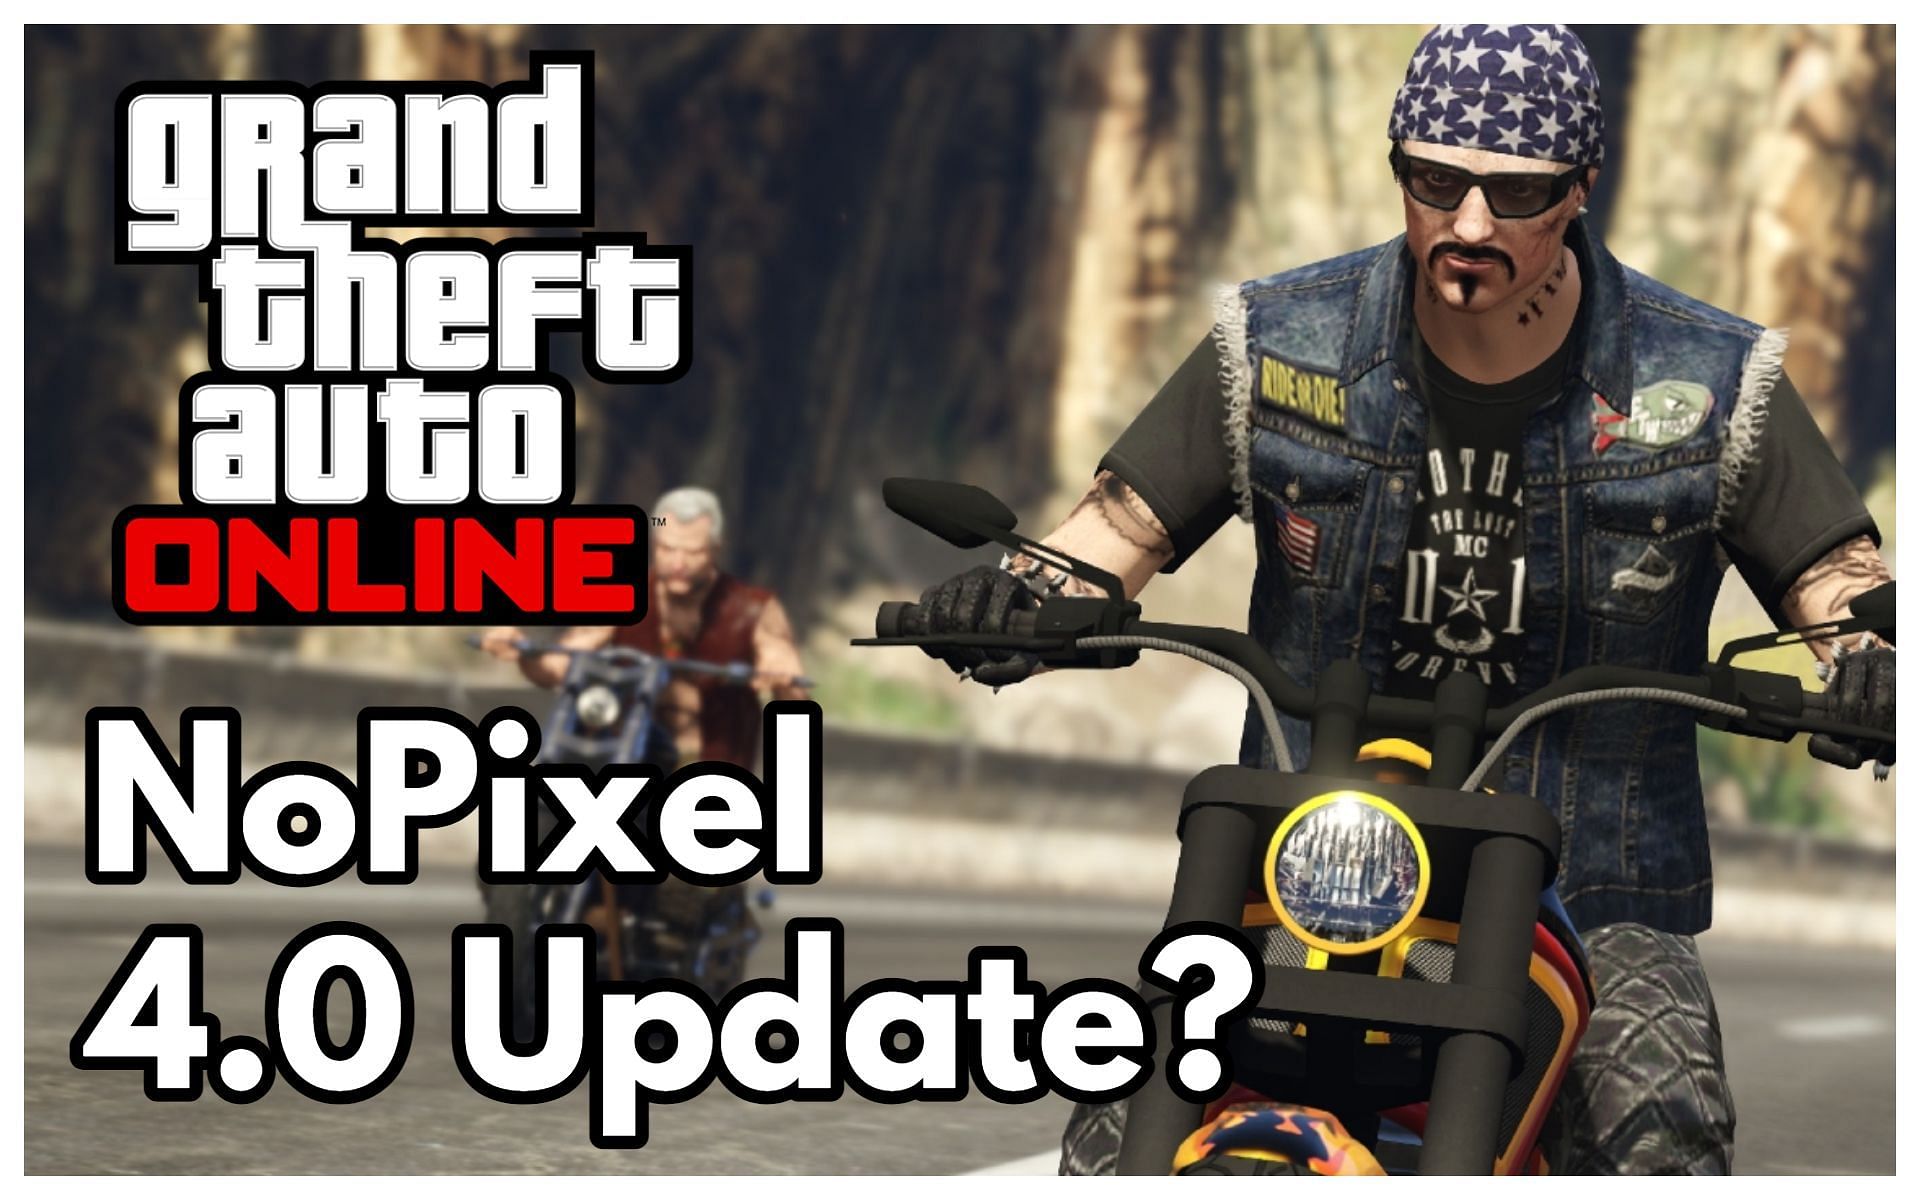 The new Nopixel update might be coming soon (Images via Rockstar Games/Sportskeeda)